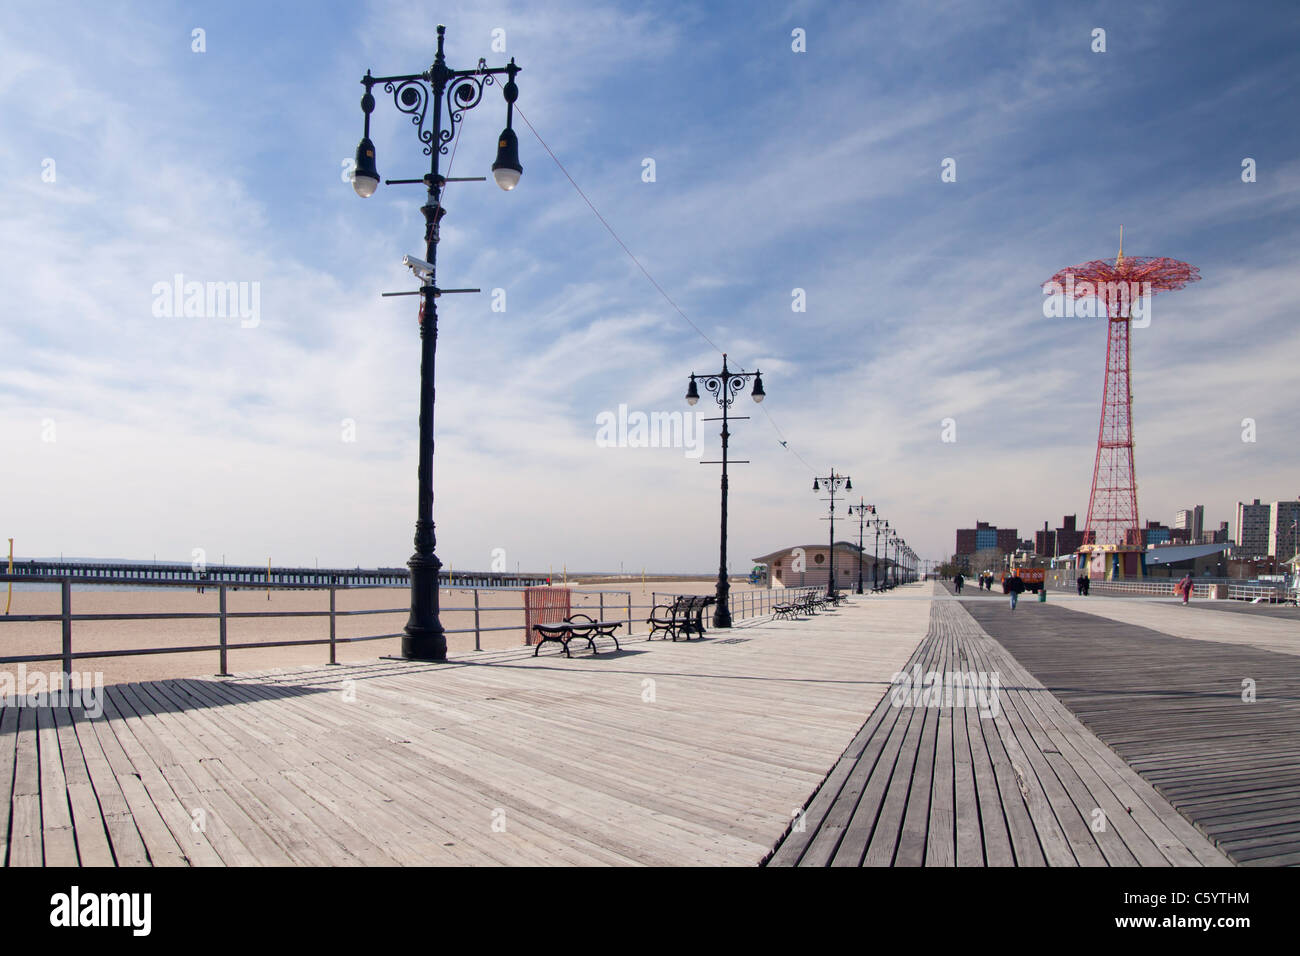 Coney Island boardwalk out of season in the winter seasons, New York, America. Stock Photo